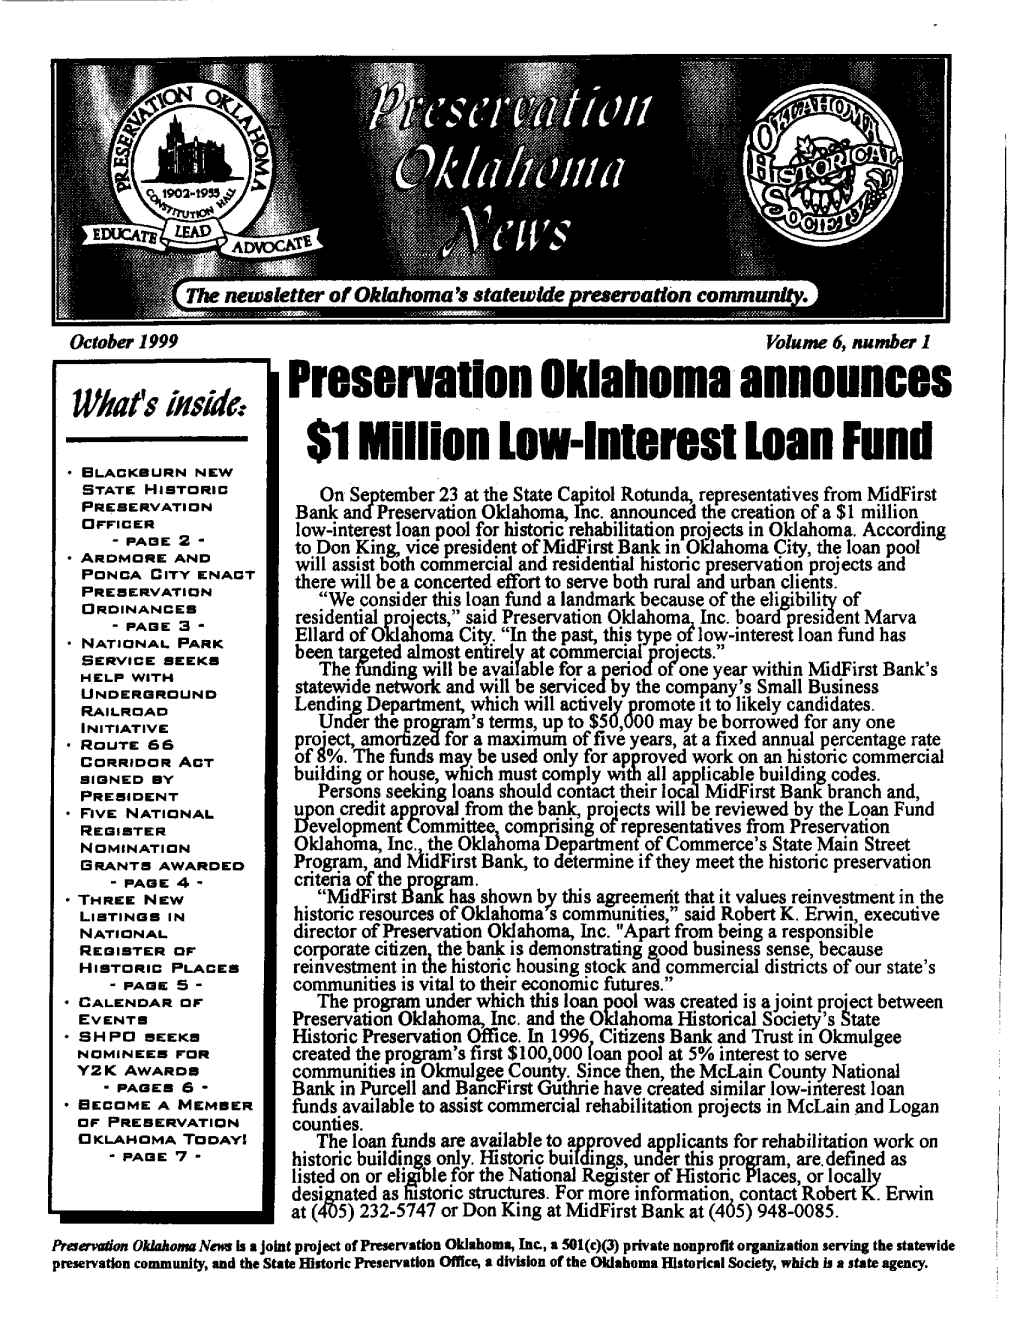 Preseruation Oklahoma Announces $1 Million Lowlnterest Loan Fund